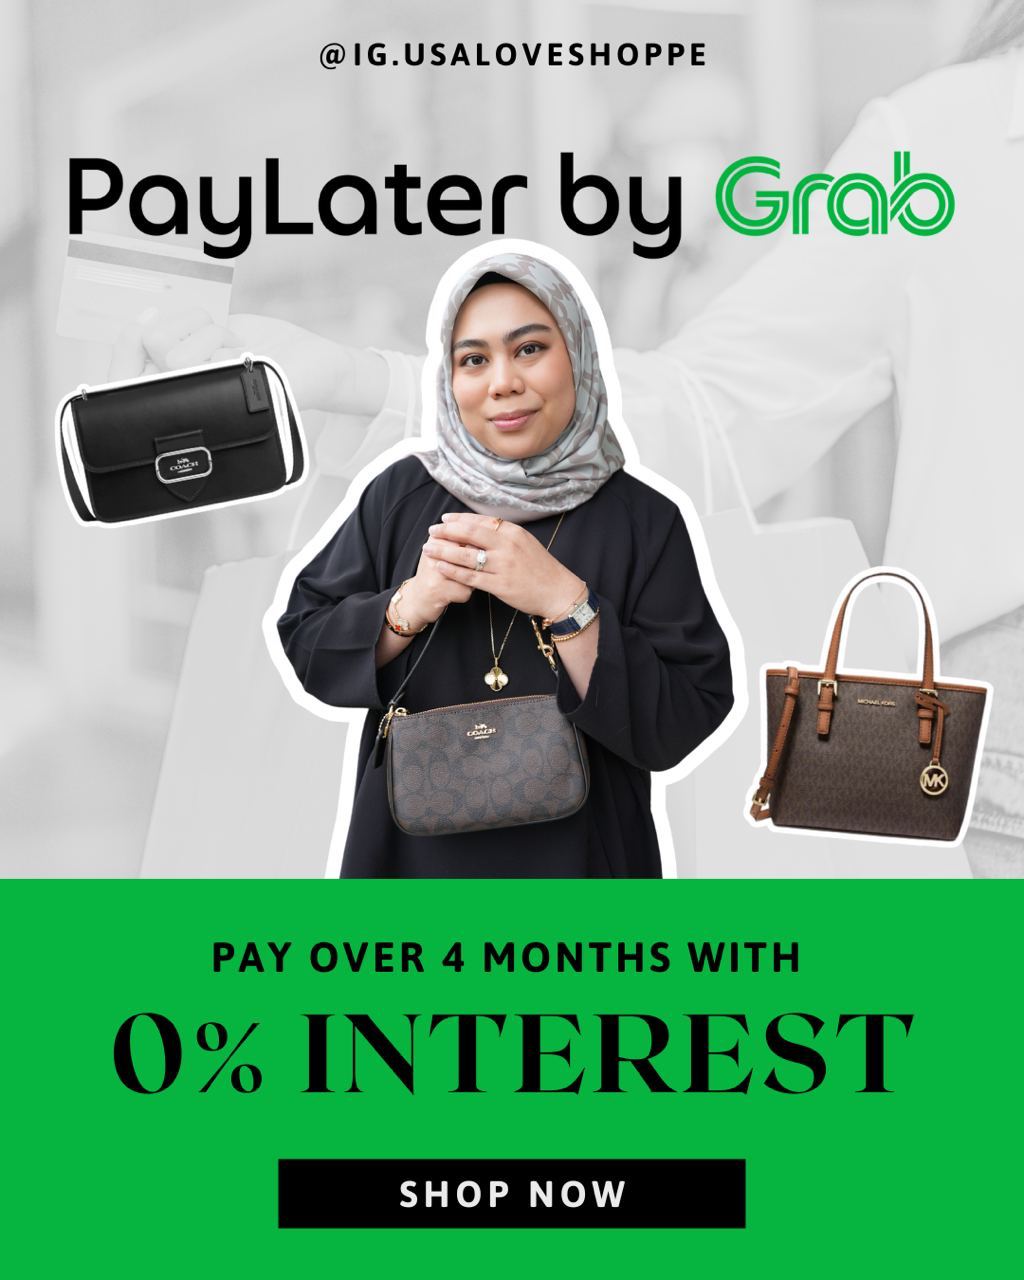 Revolutionize Your Shopping: Enjoy 0% Interest with #PayLaterbyGrab!